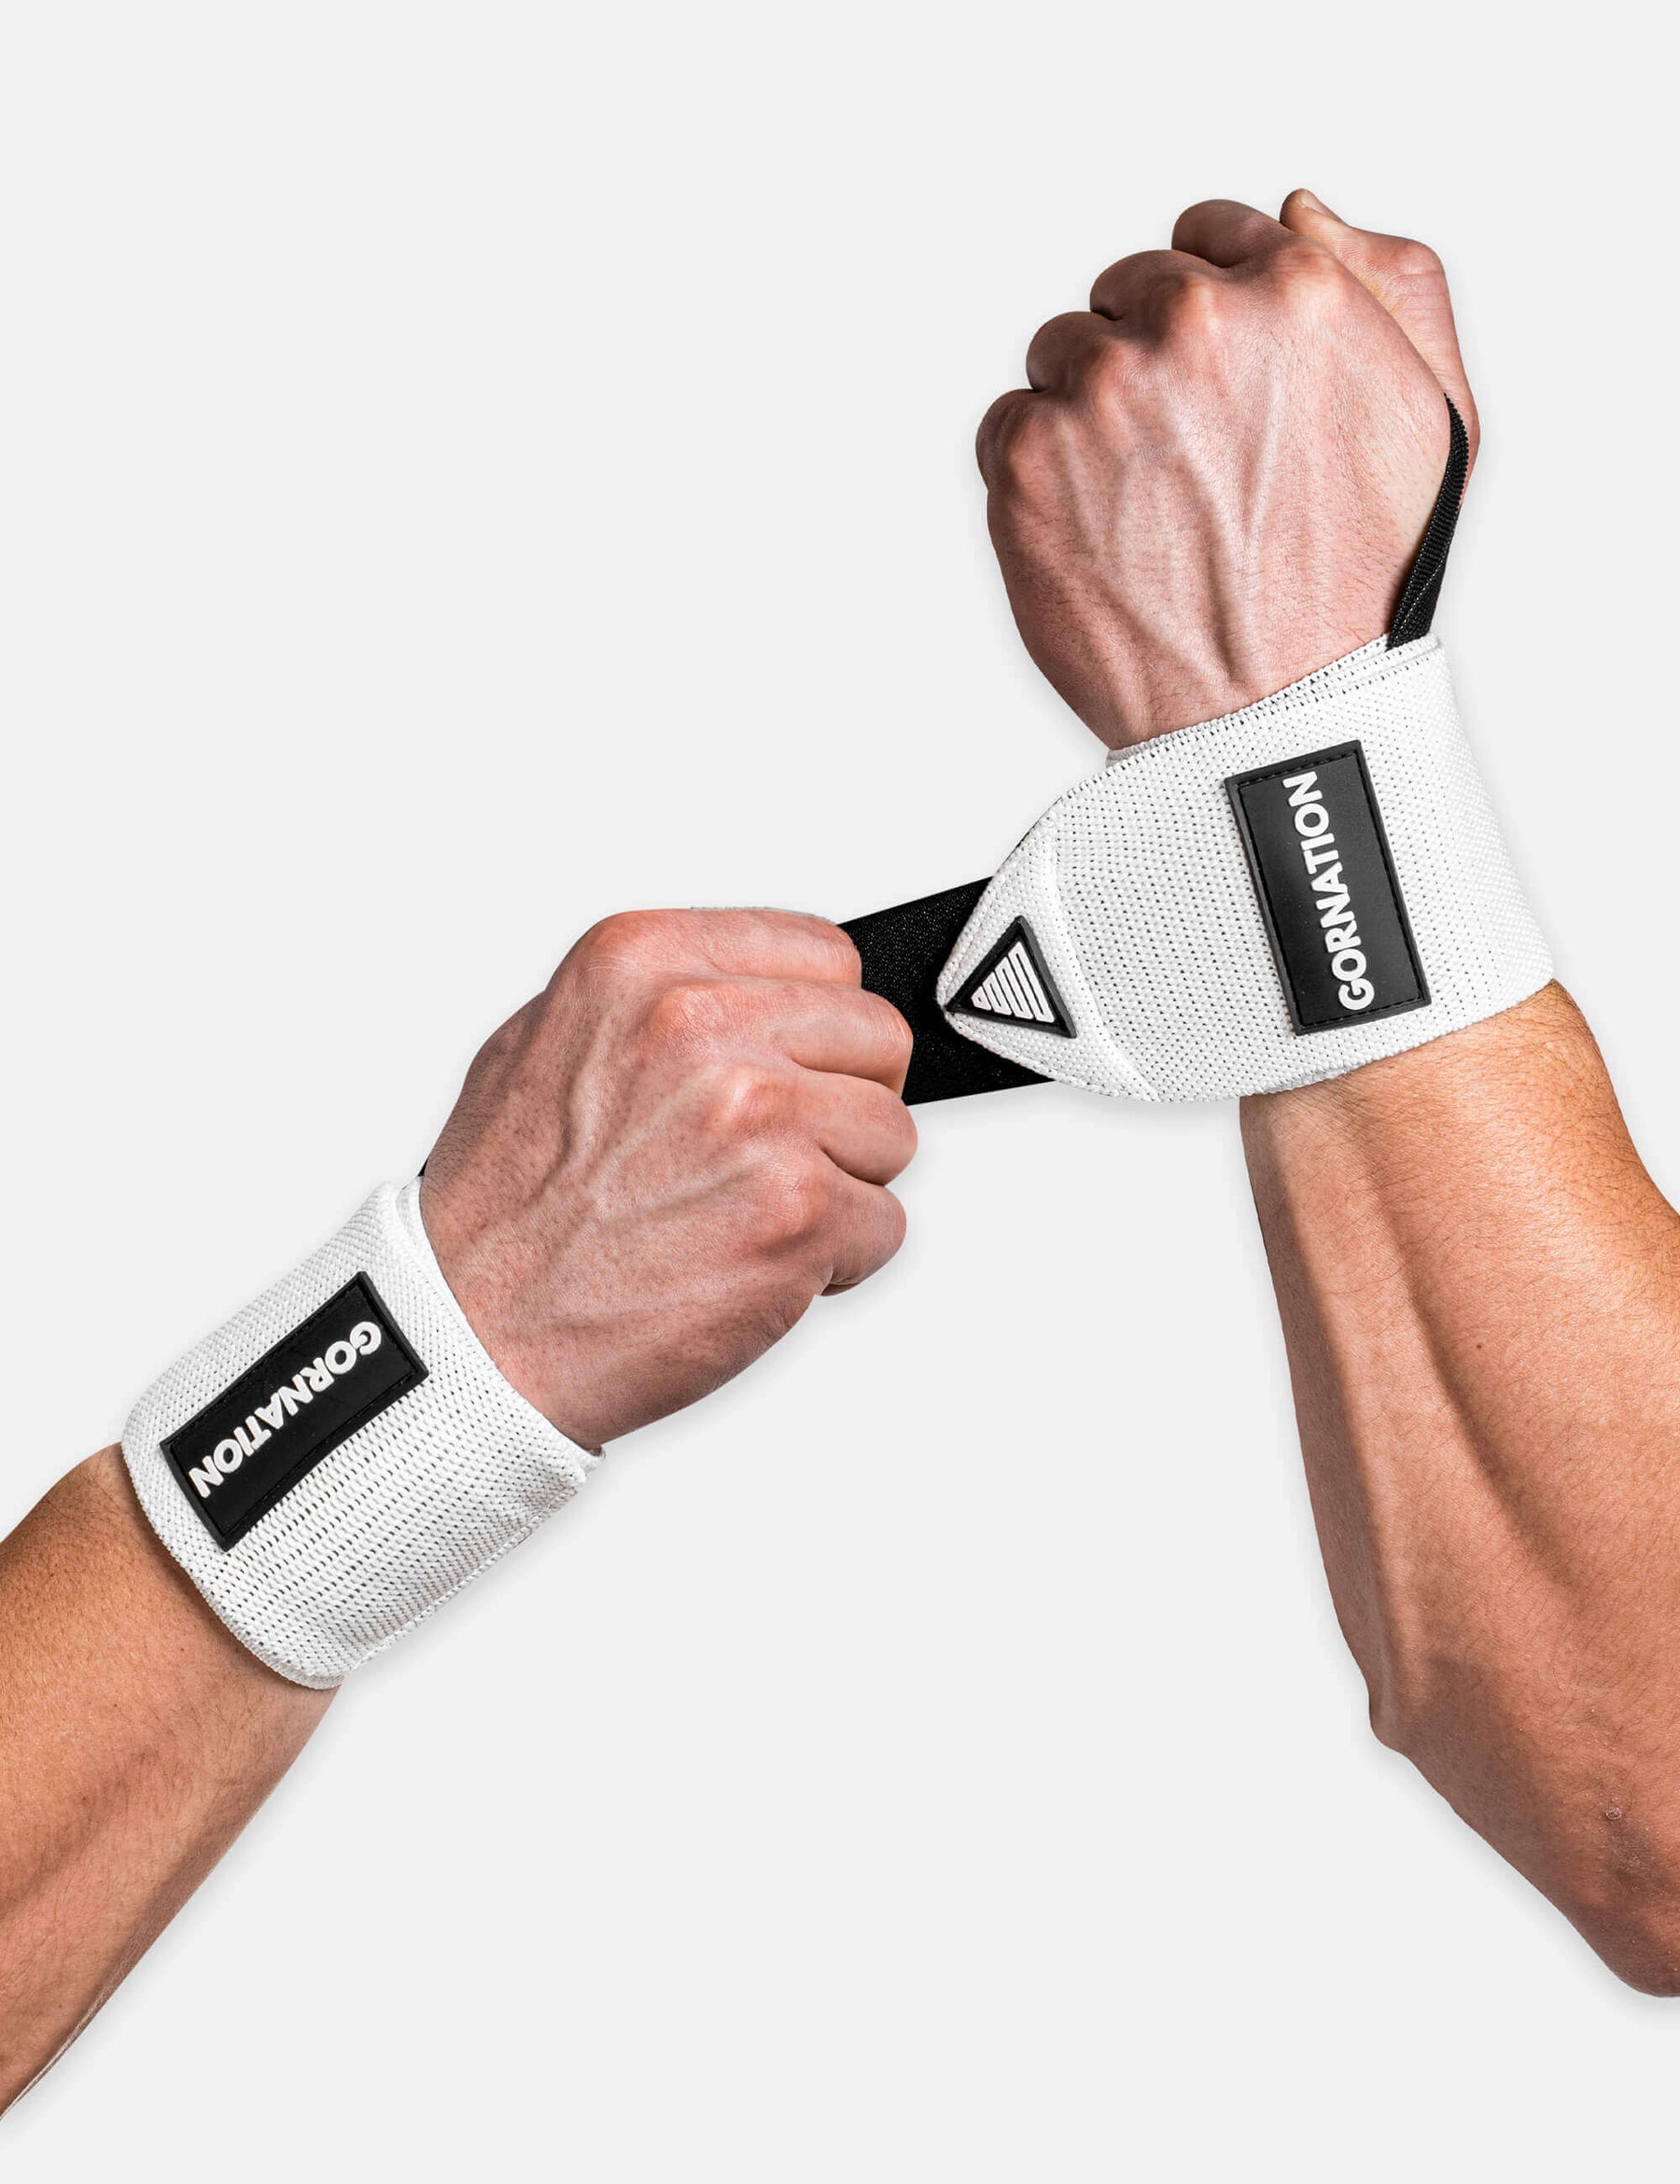 White power wrist wraps to improve stability and get more power moves. To improve stability and injury prevention.